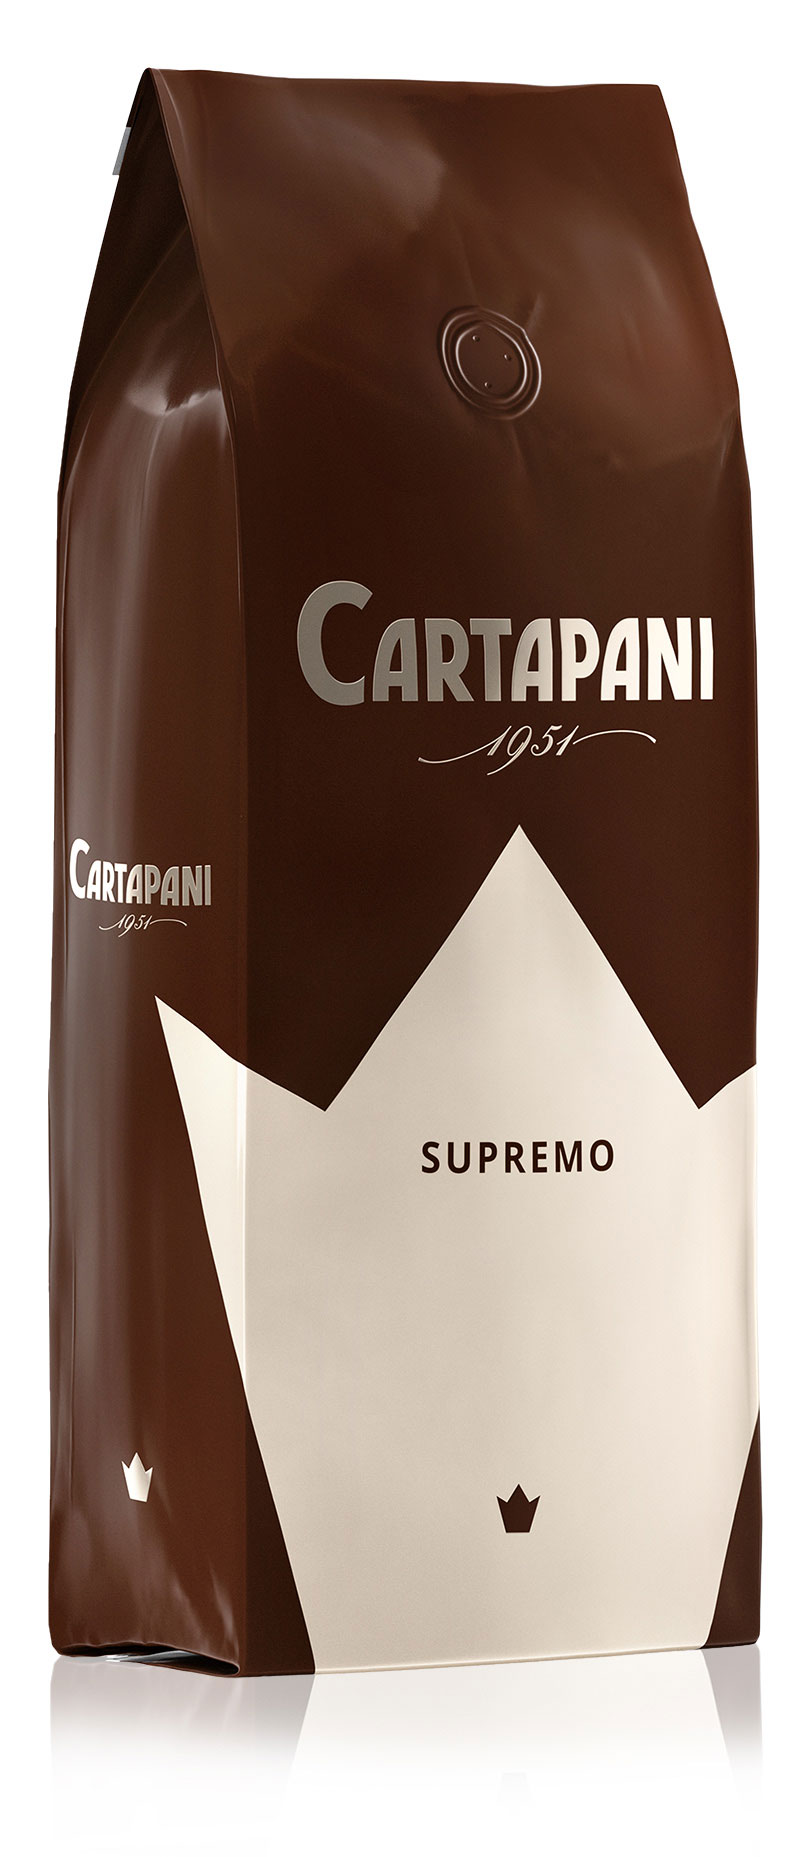 SUPREMO - Cartapani